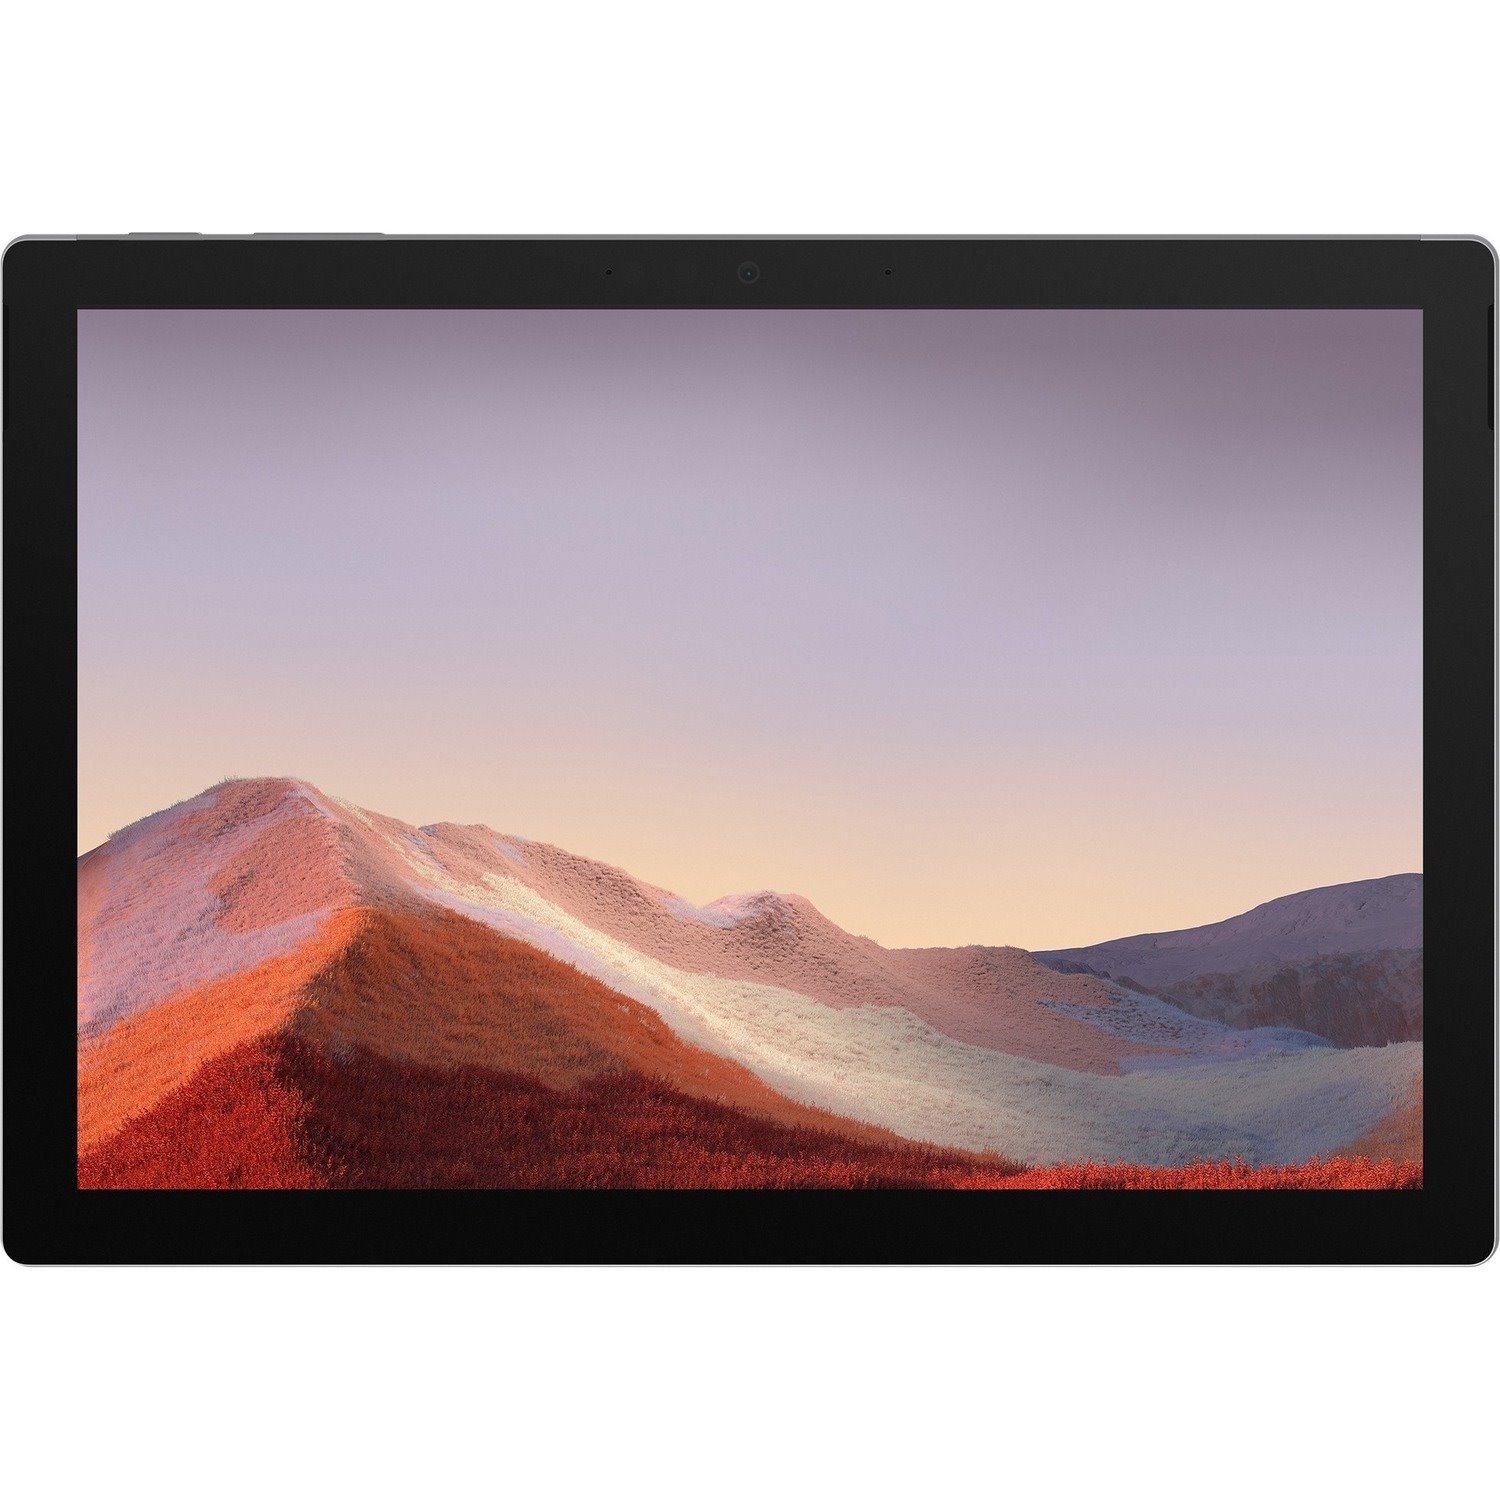 Microsoft Surface Pro 7 Tablet - 12.3" - Core i5 10th Gen - 8 GB RAM - 128 GB SSD - Windows 10 Home - Platinum